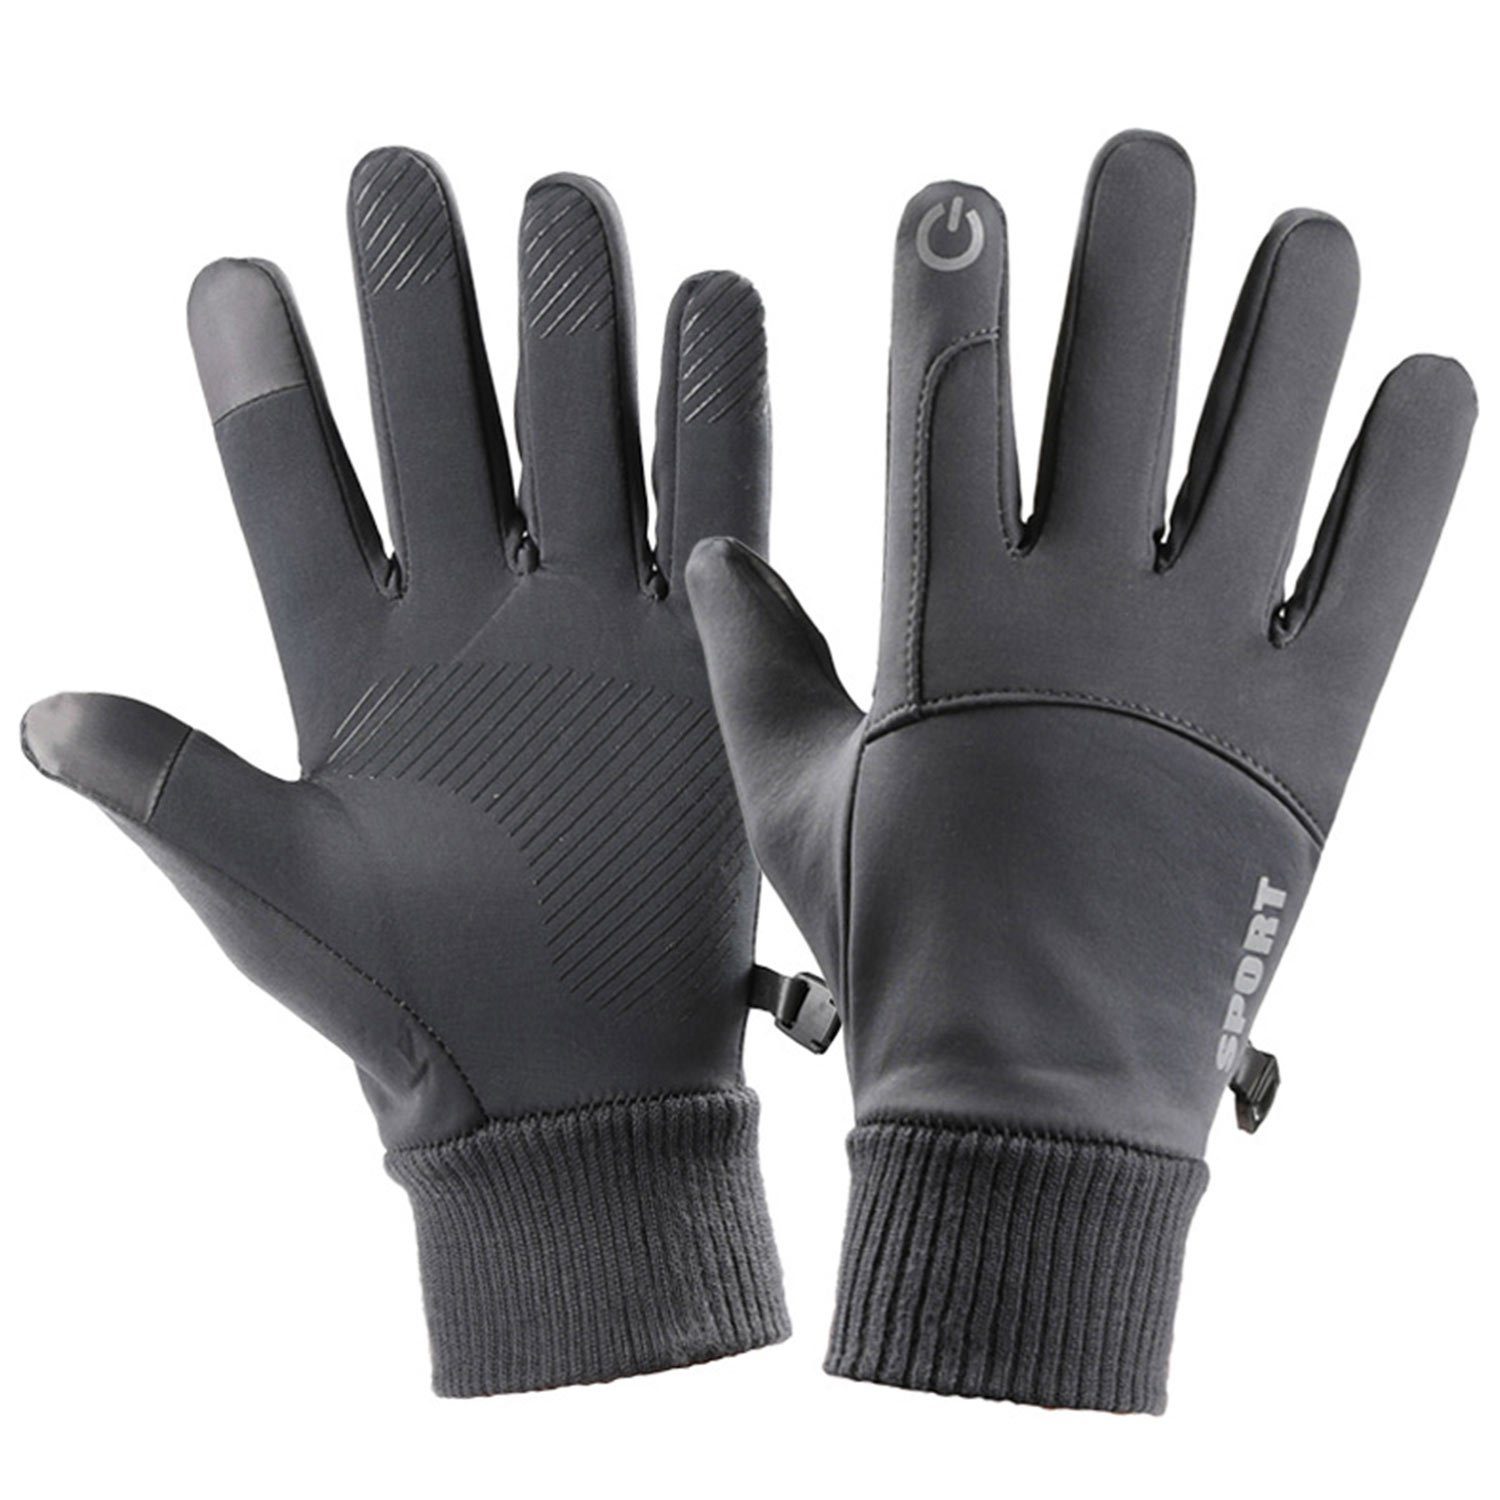 MAGICSHE Fahrradhandschuhe Unisex Touchscreen Handschuhe warme Handschuhe Geeignet zum Radfahren, Skifahren, Arbeiten im Freien grau